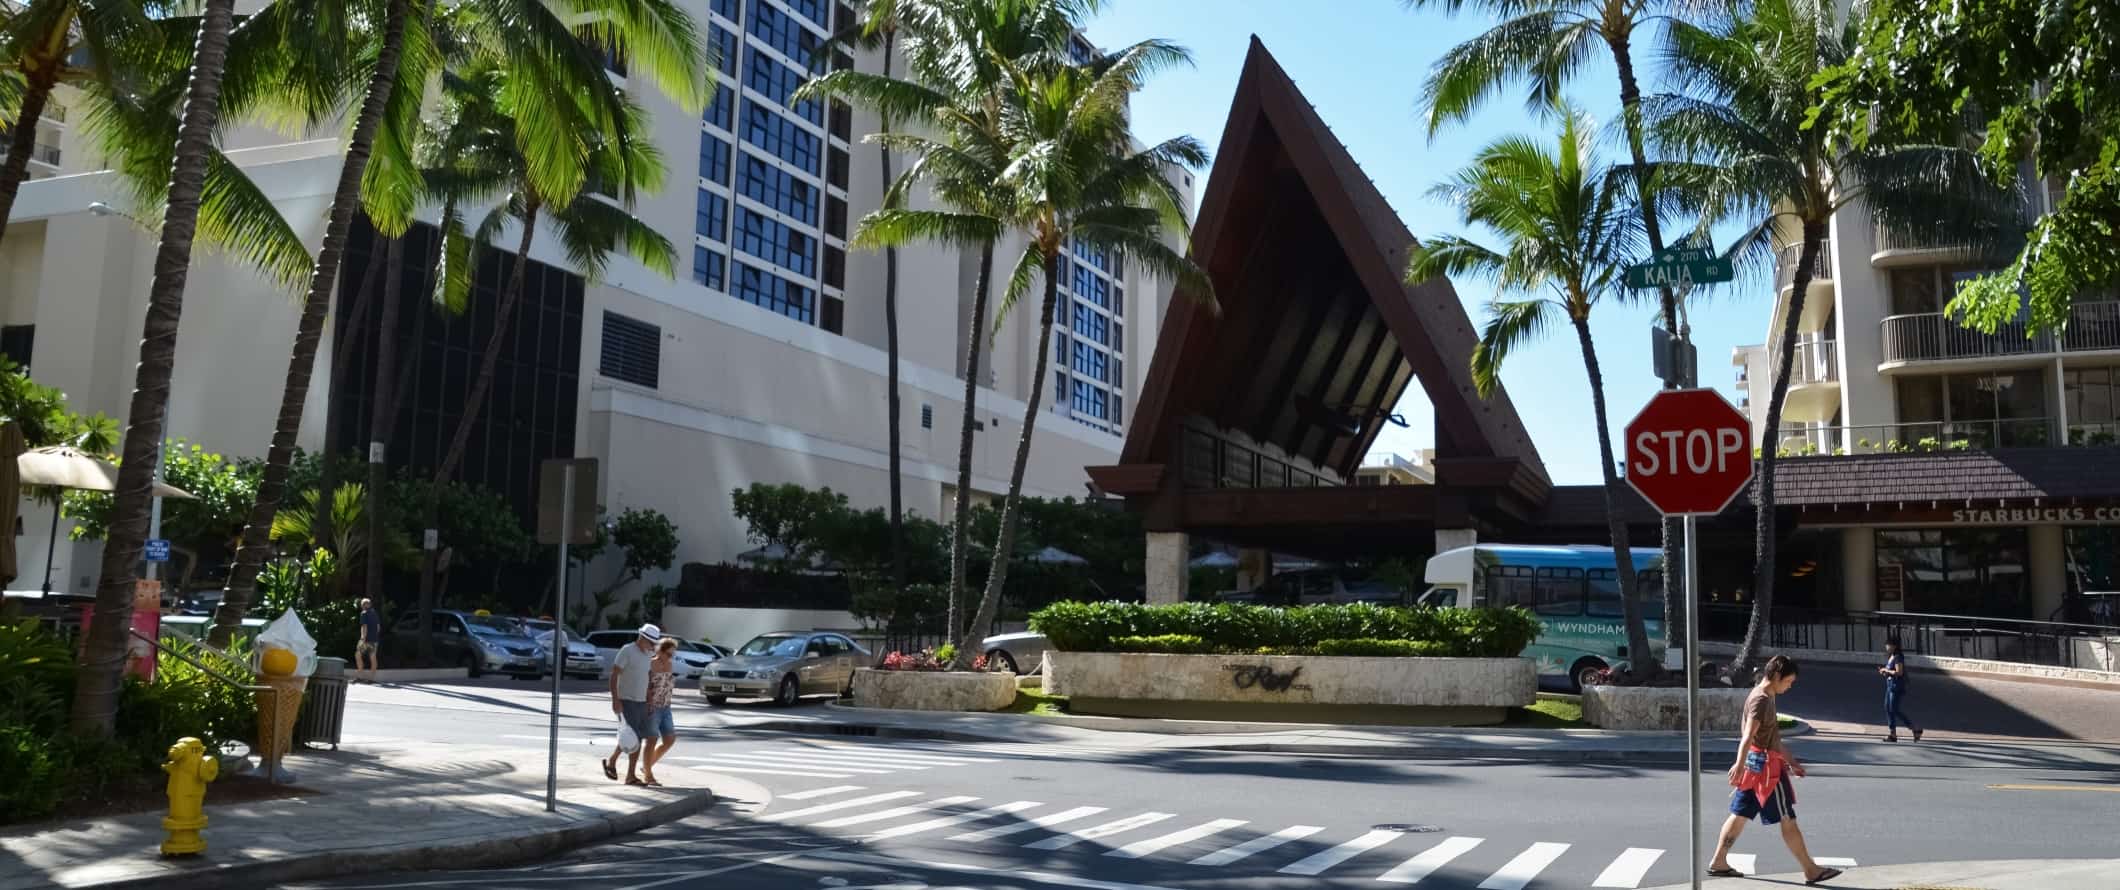 People walking down the street under palm trees in Honolulu, Hawaii.